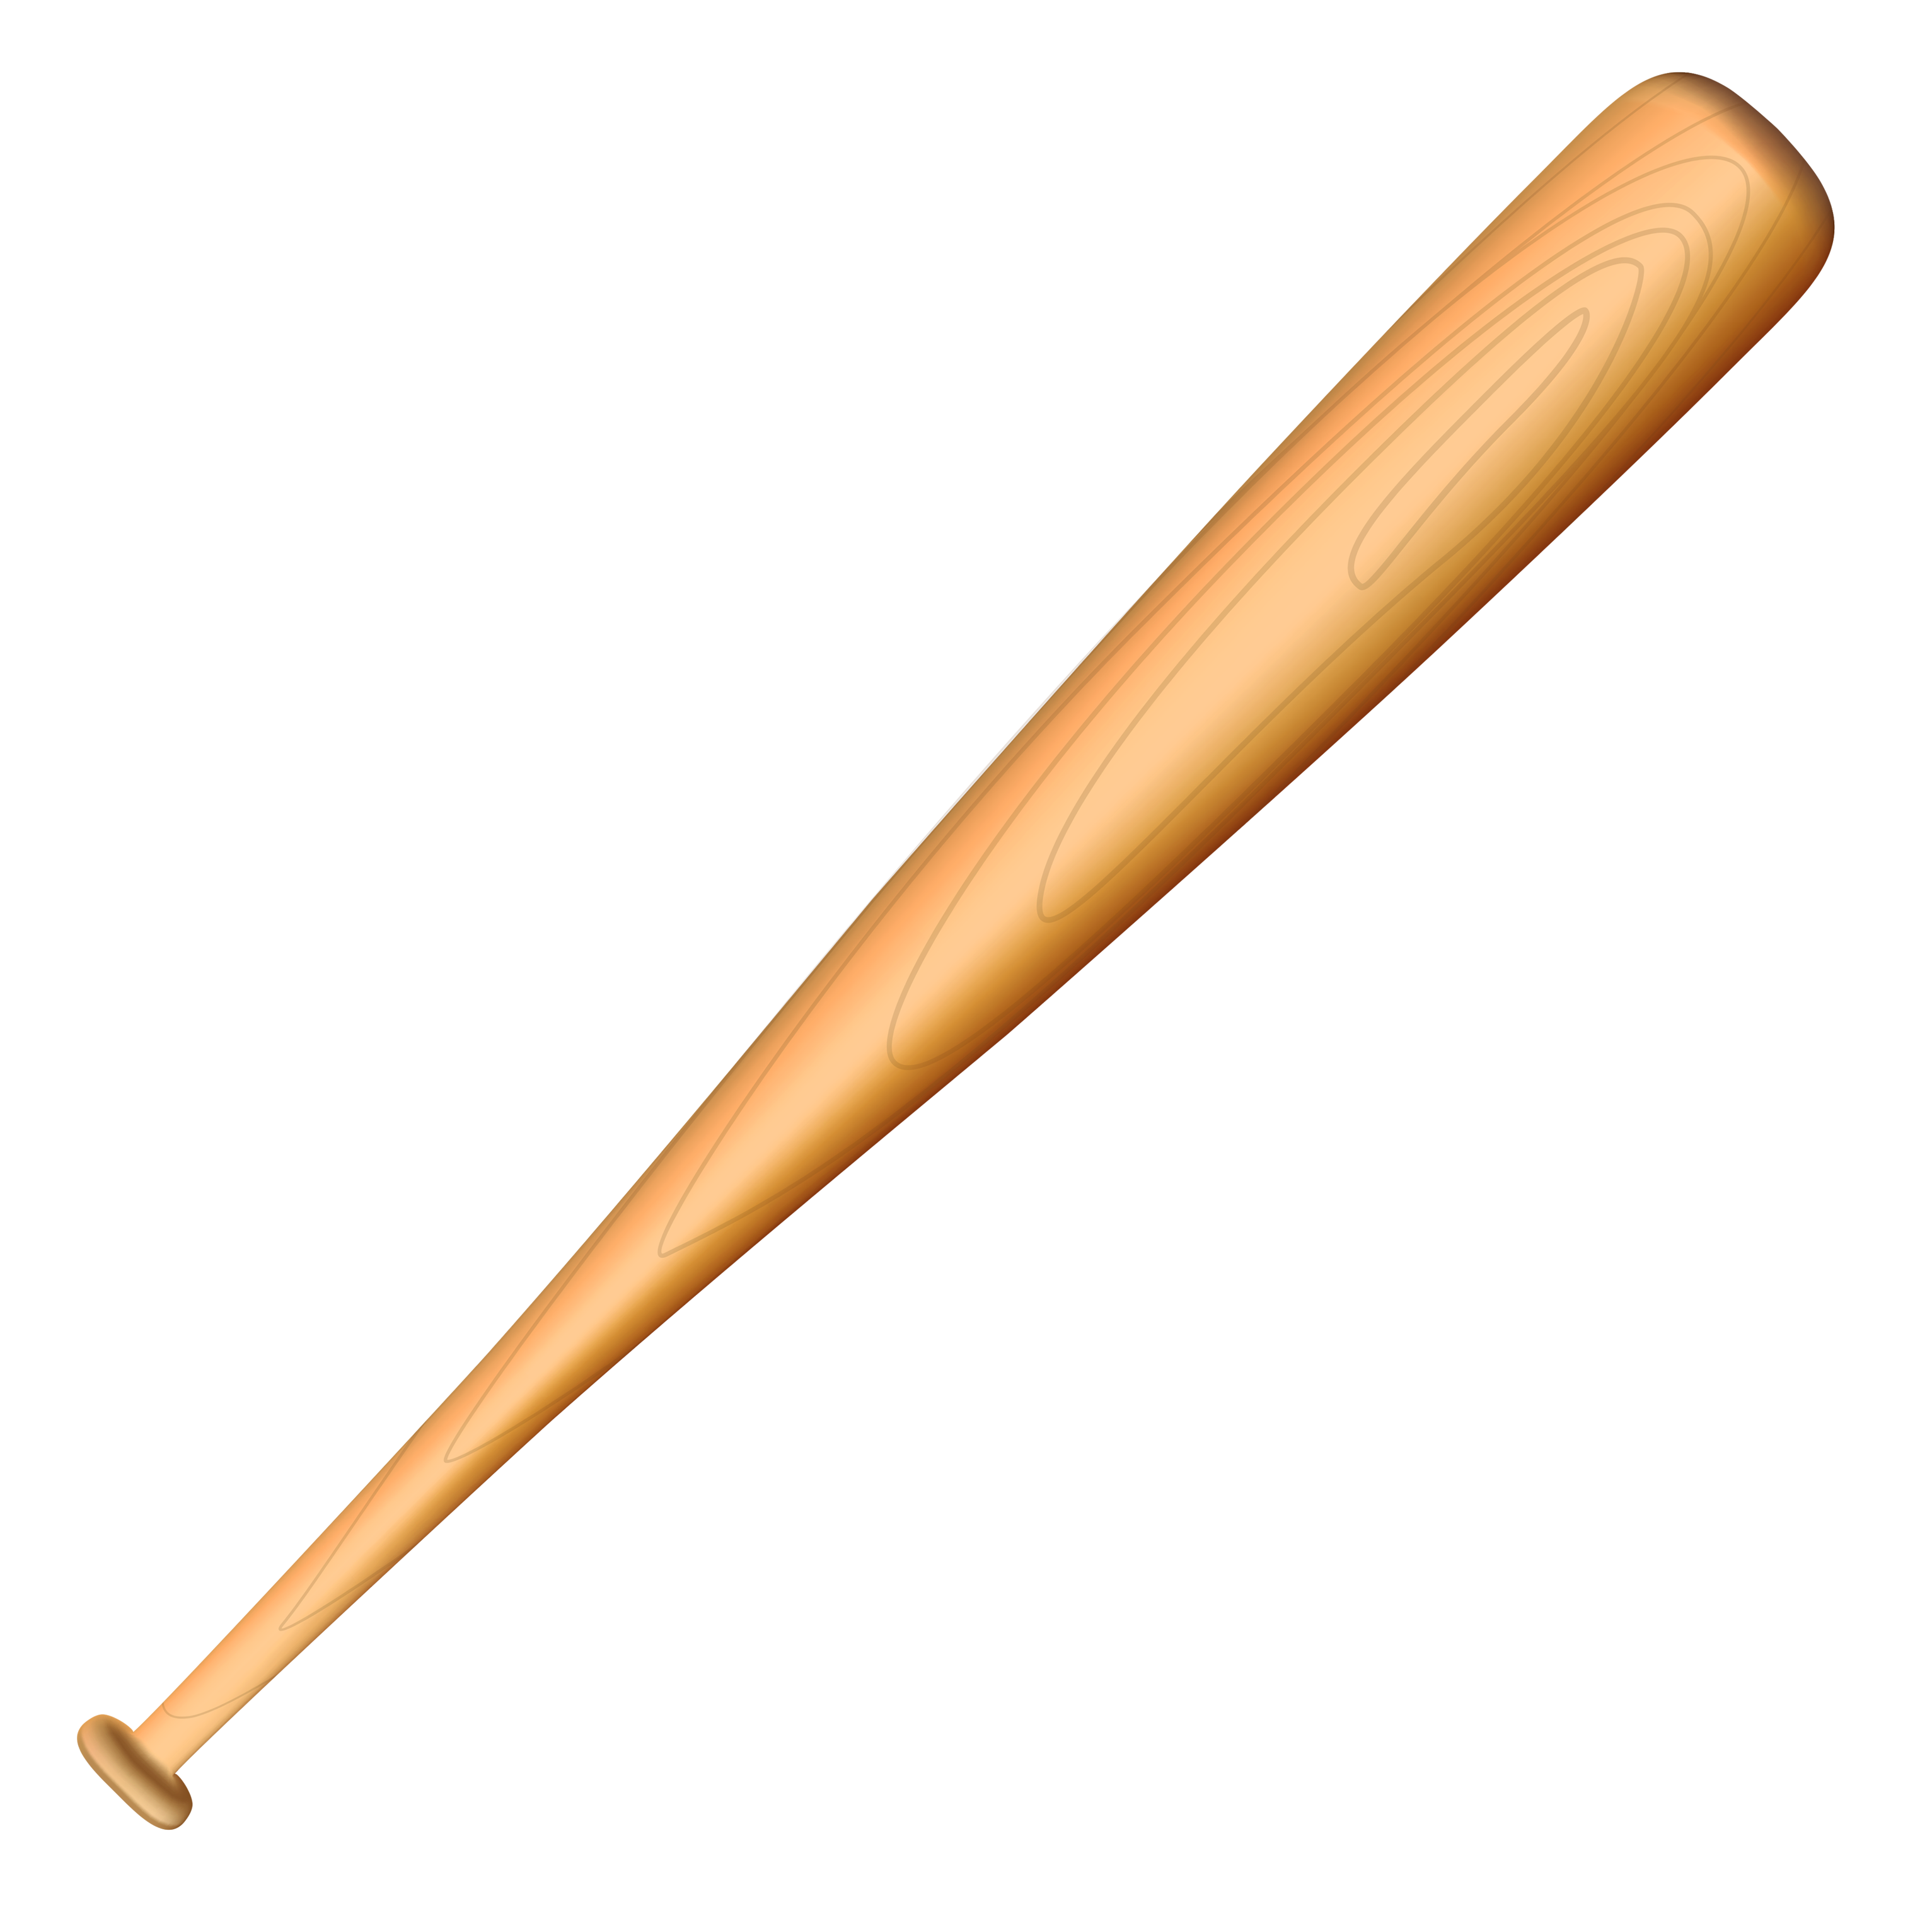 Baseball Bat PNG Image File